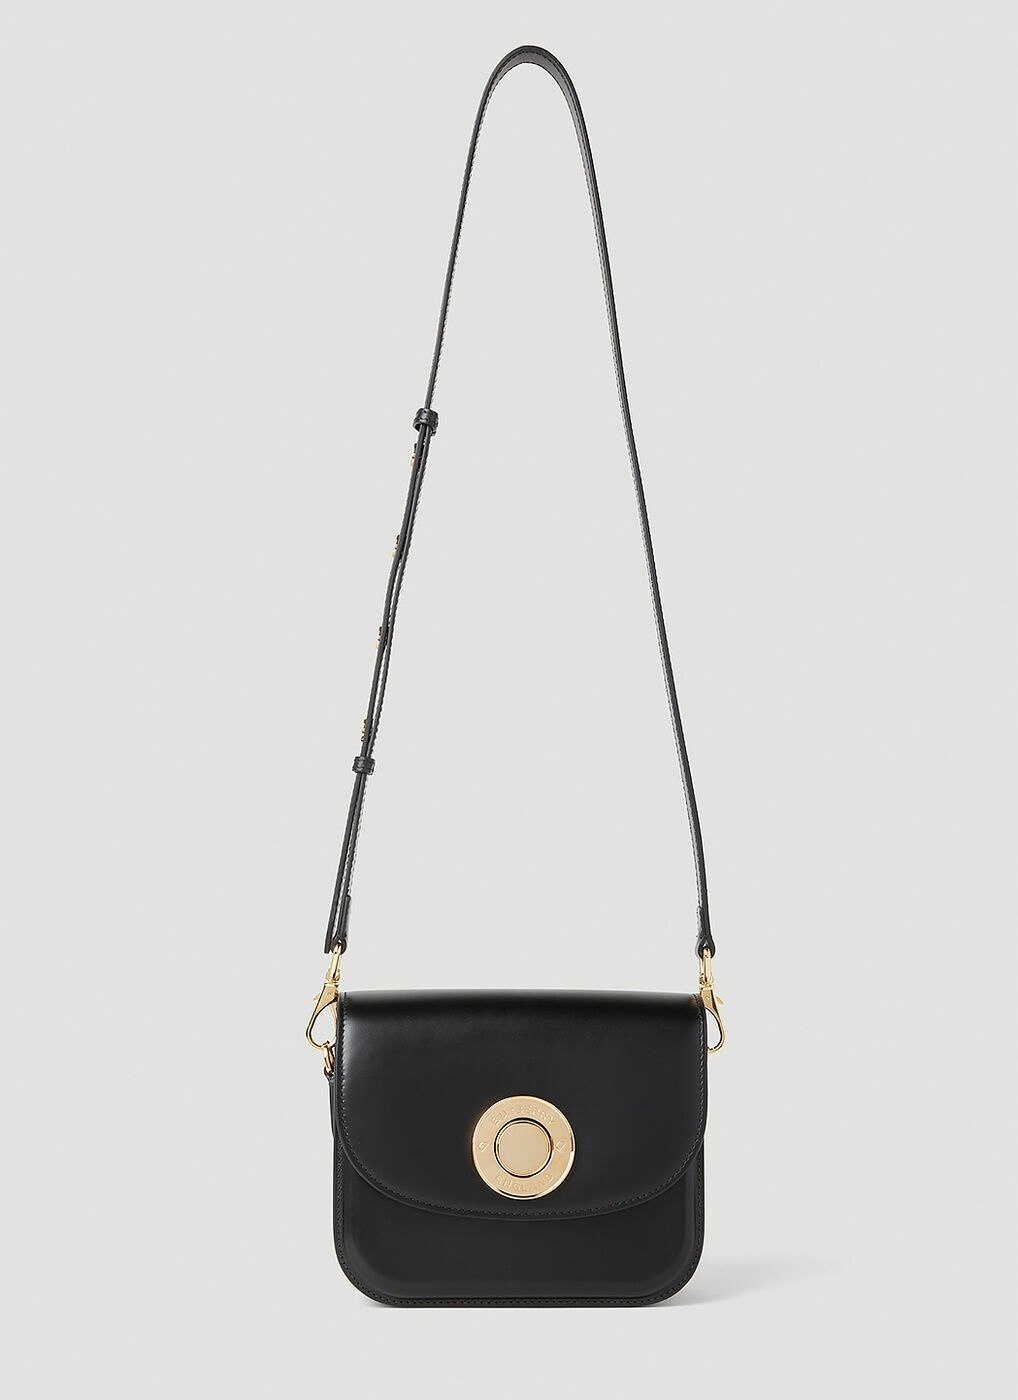 Burberry 'Elizabeth' Small Bag